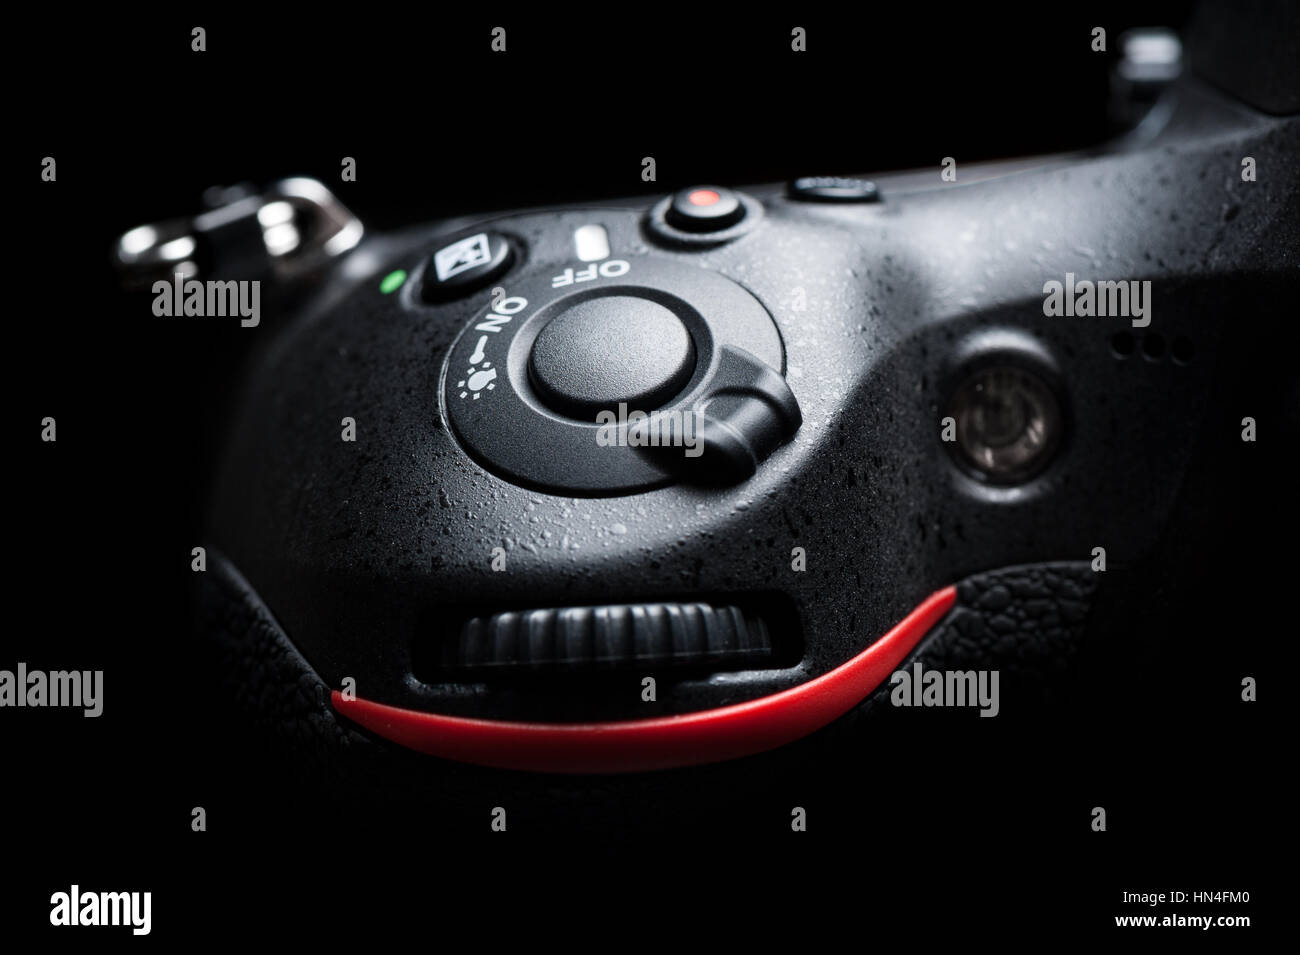 closeup-shutter-release-button-on-professional-dslr-camera-stock-photo